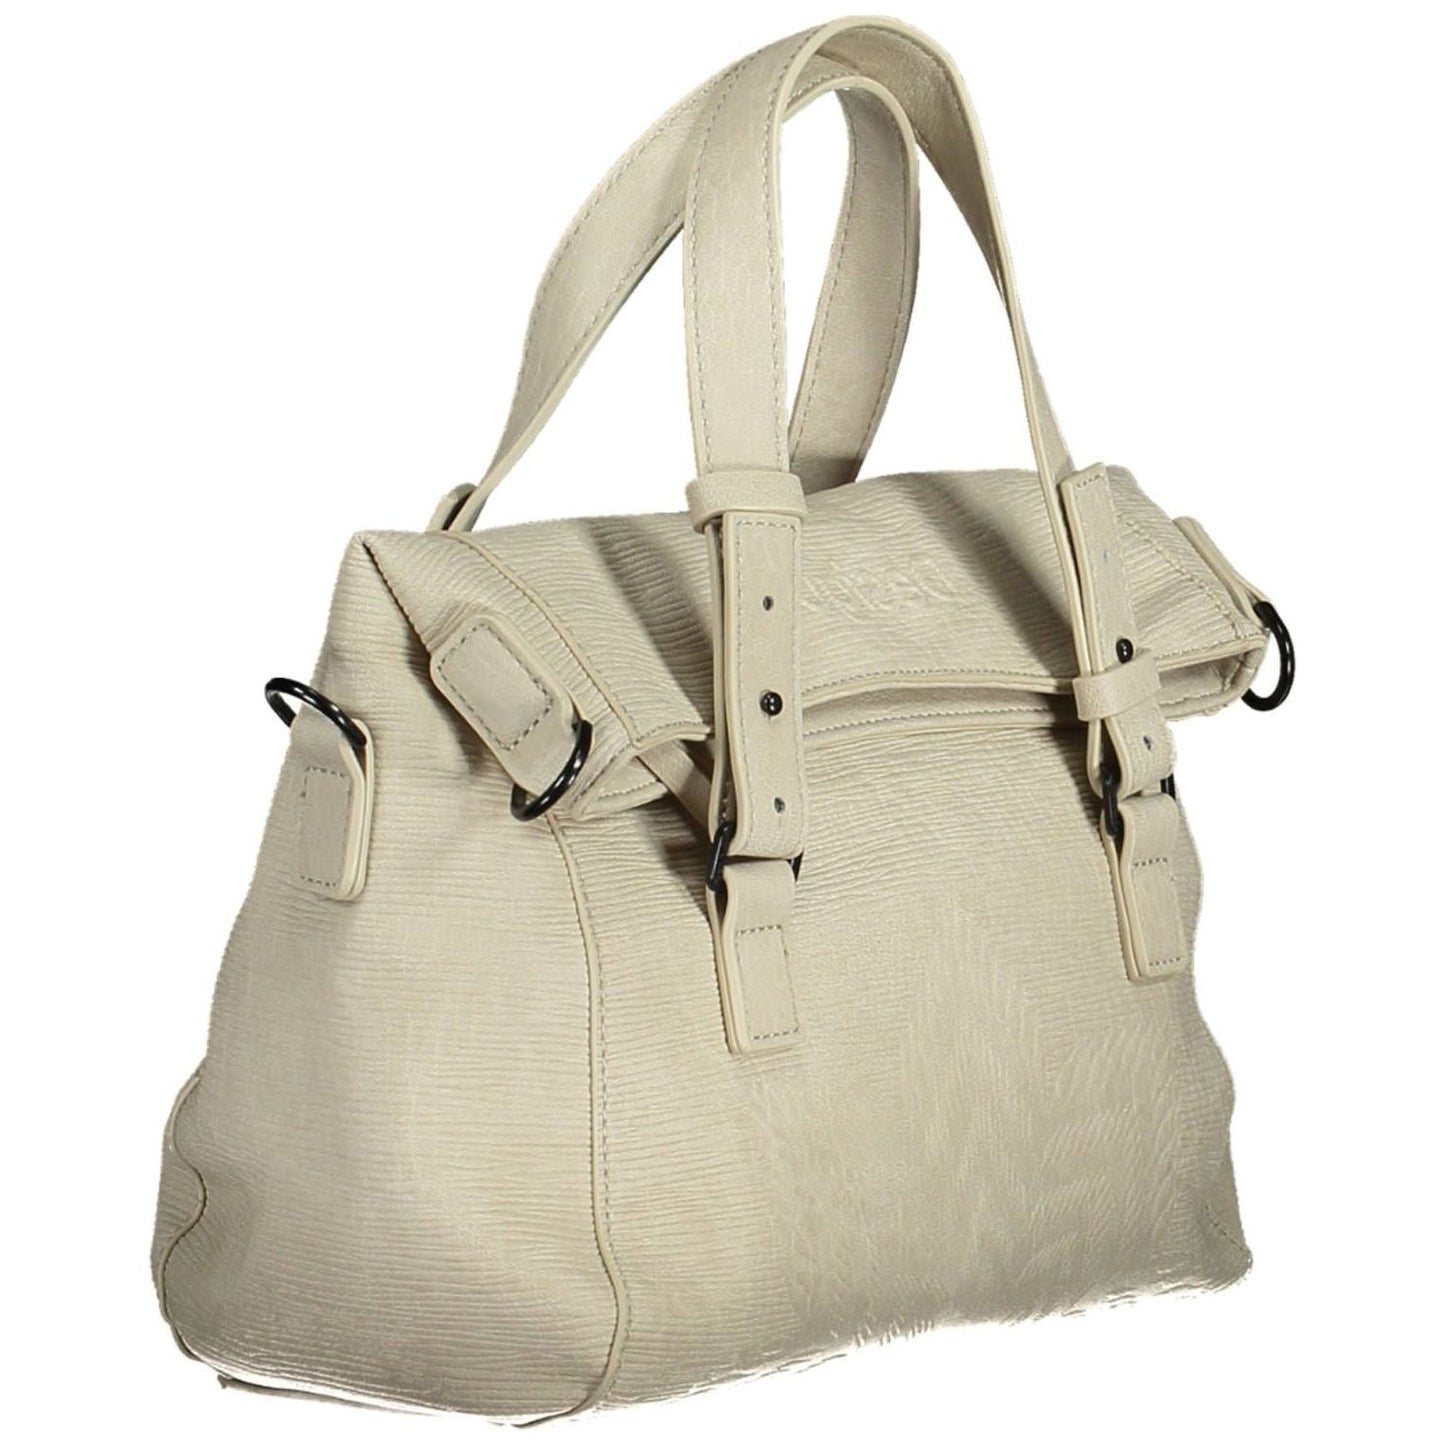 Desigual Chic White Contrasting Detail Handbag chic-white-contrasting-detail-handbag